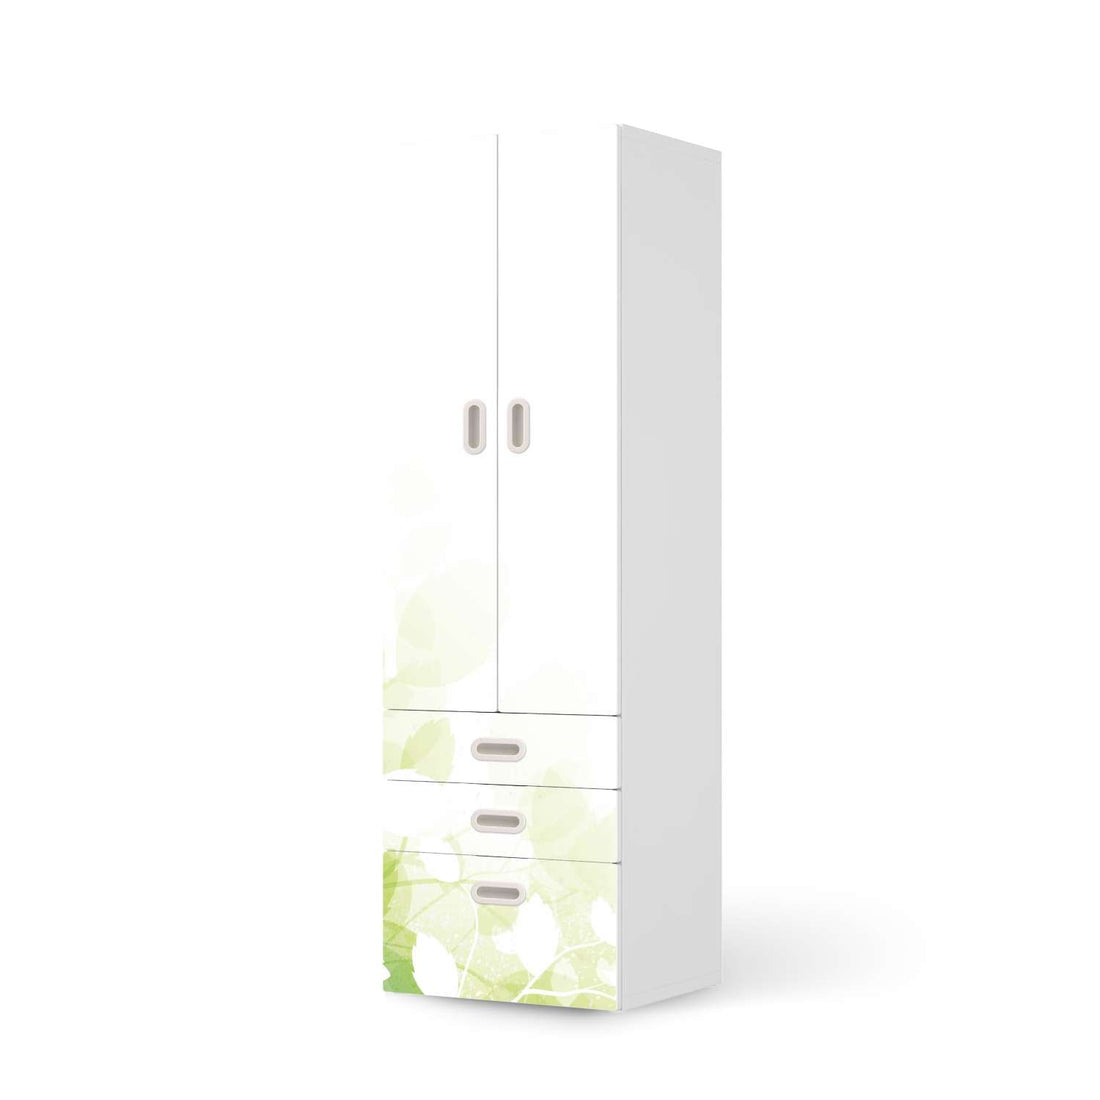 Klebefolie Flower Light - IKEA Stuva / Fritids kombiniert - 3 Schubladen und 2 große Türen  - weiss